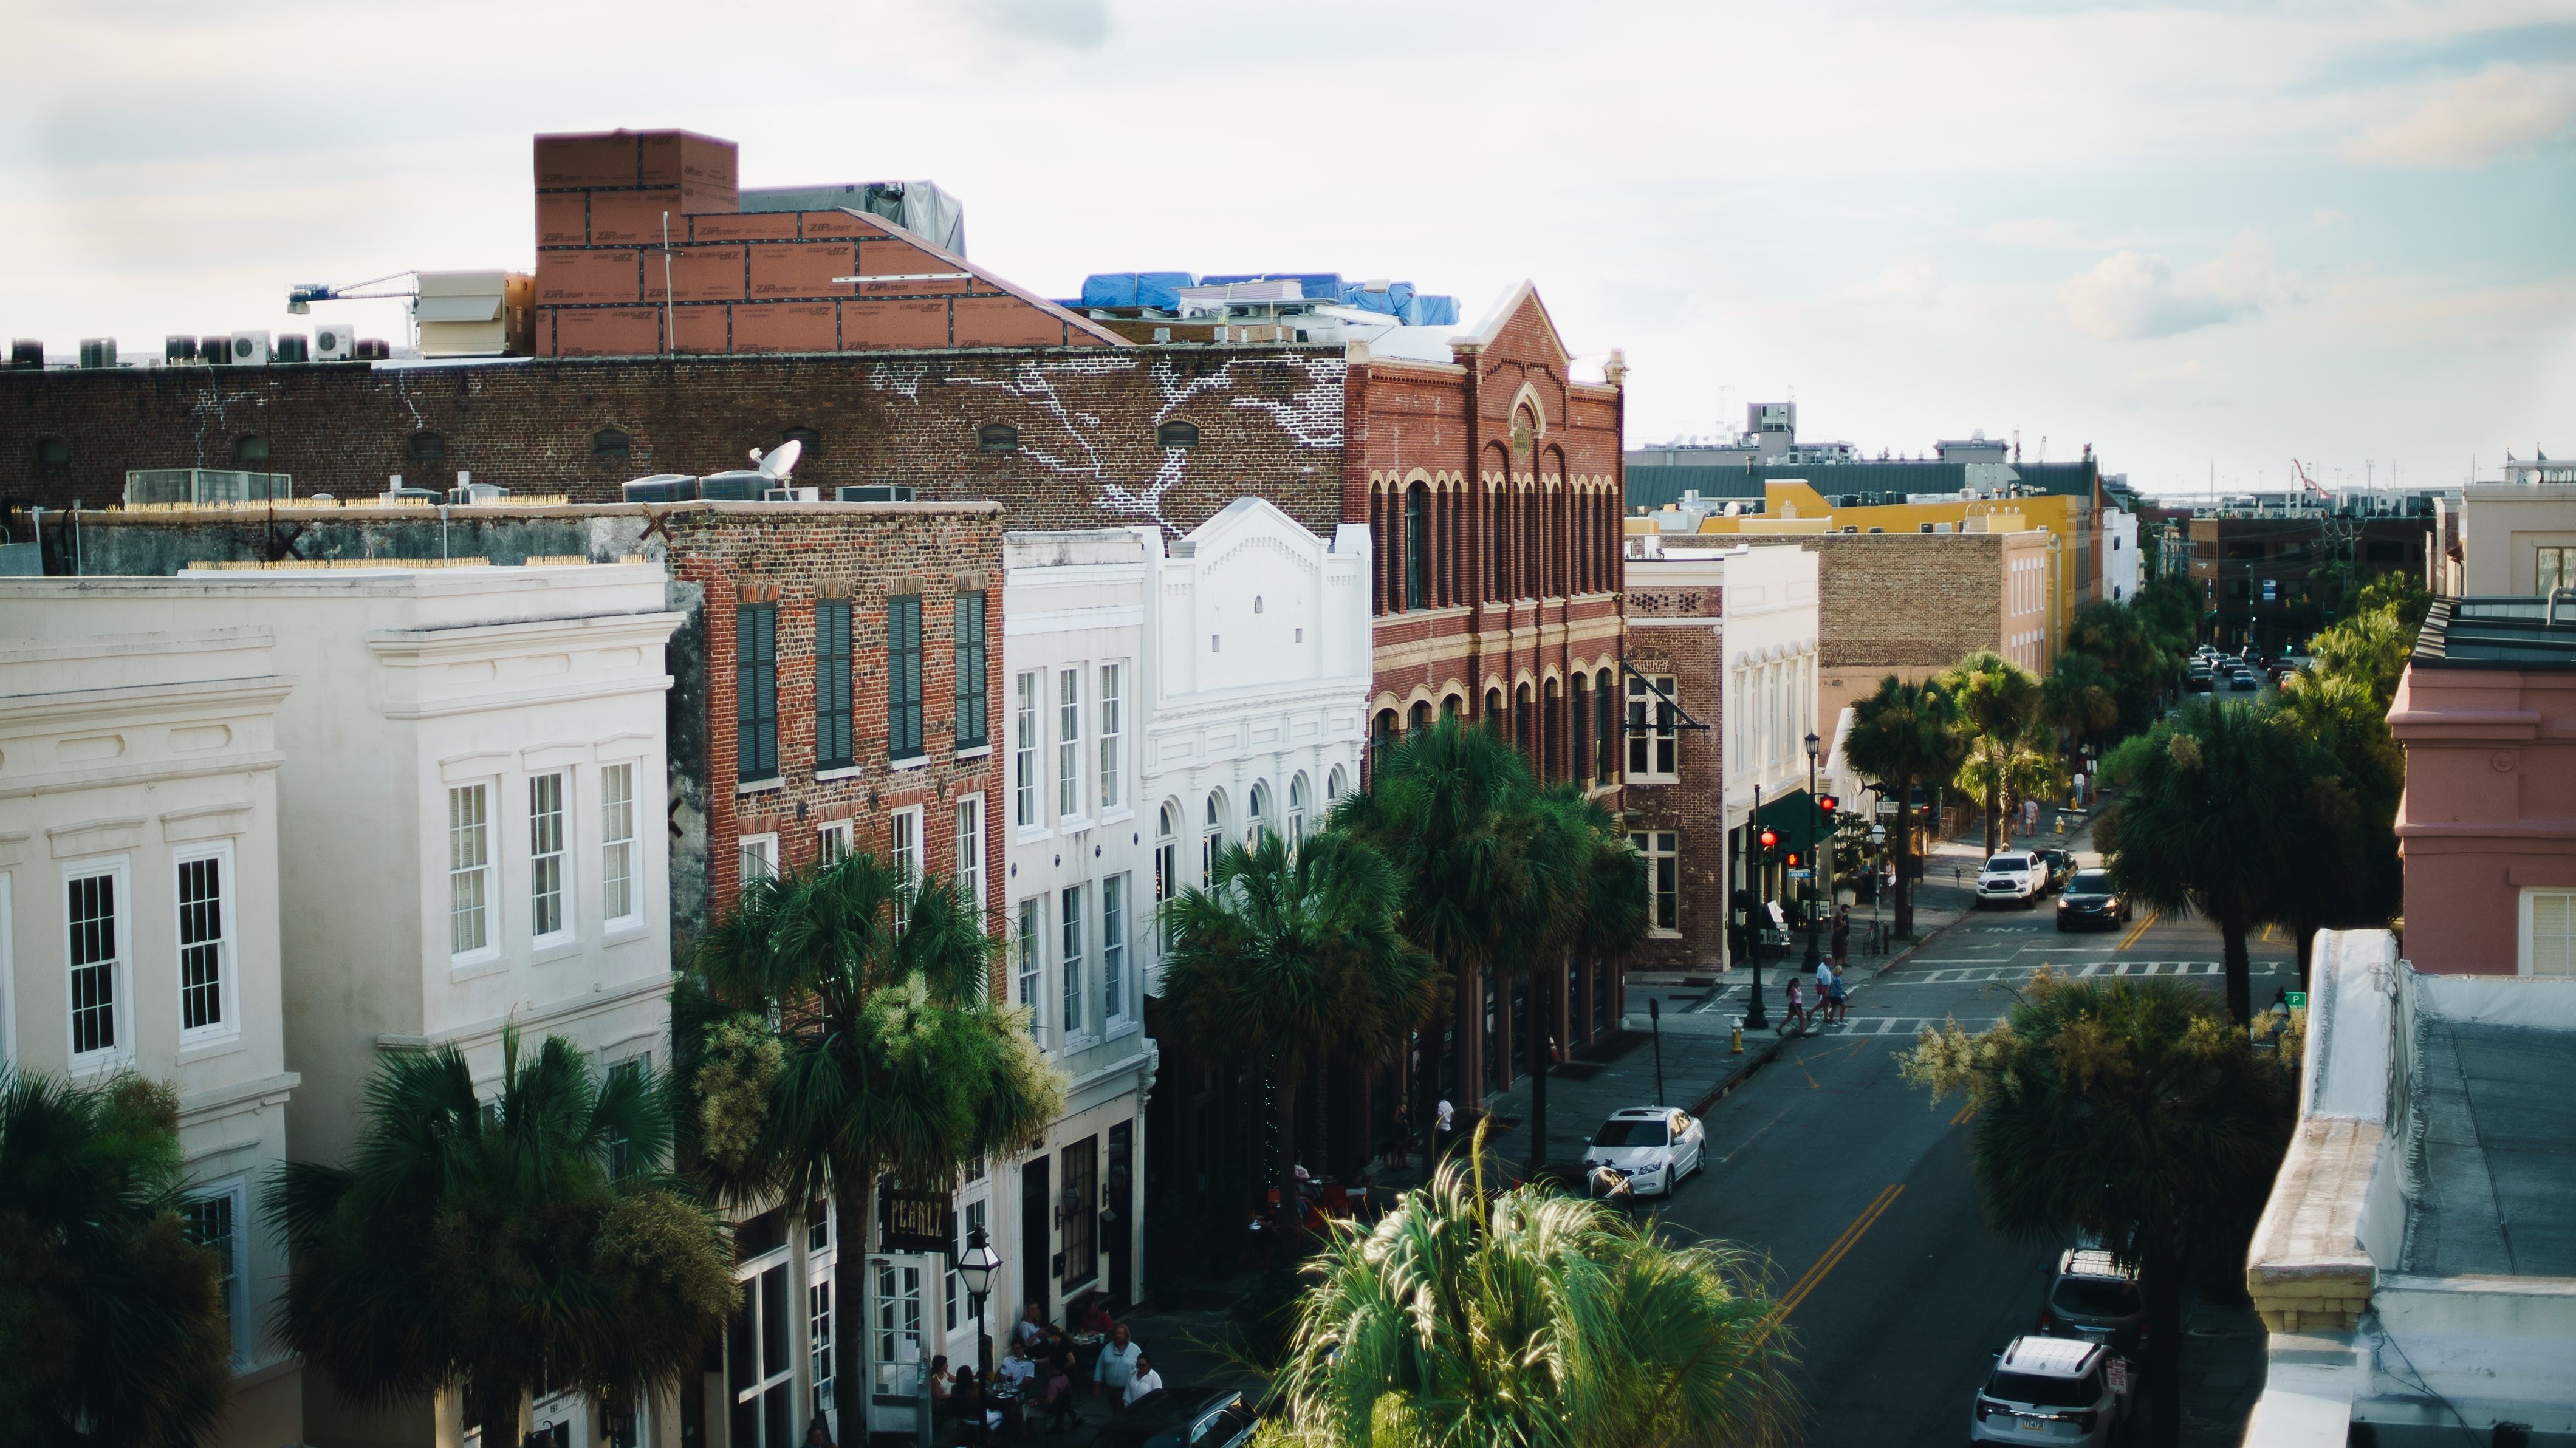 Downtown Charleston, South Carolina